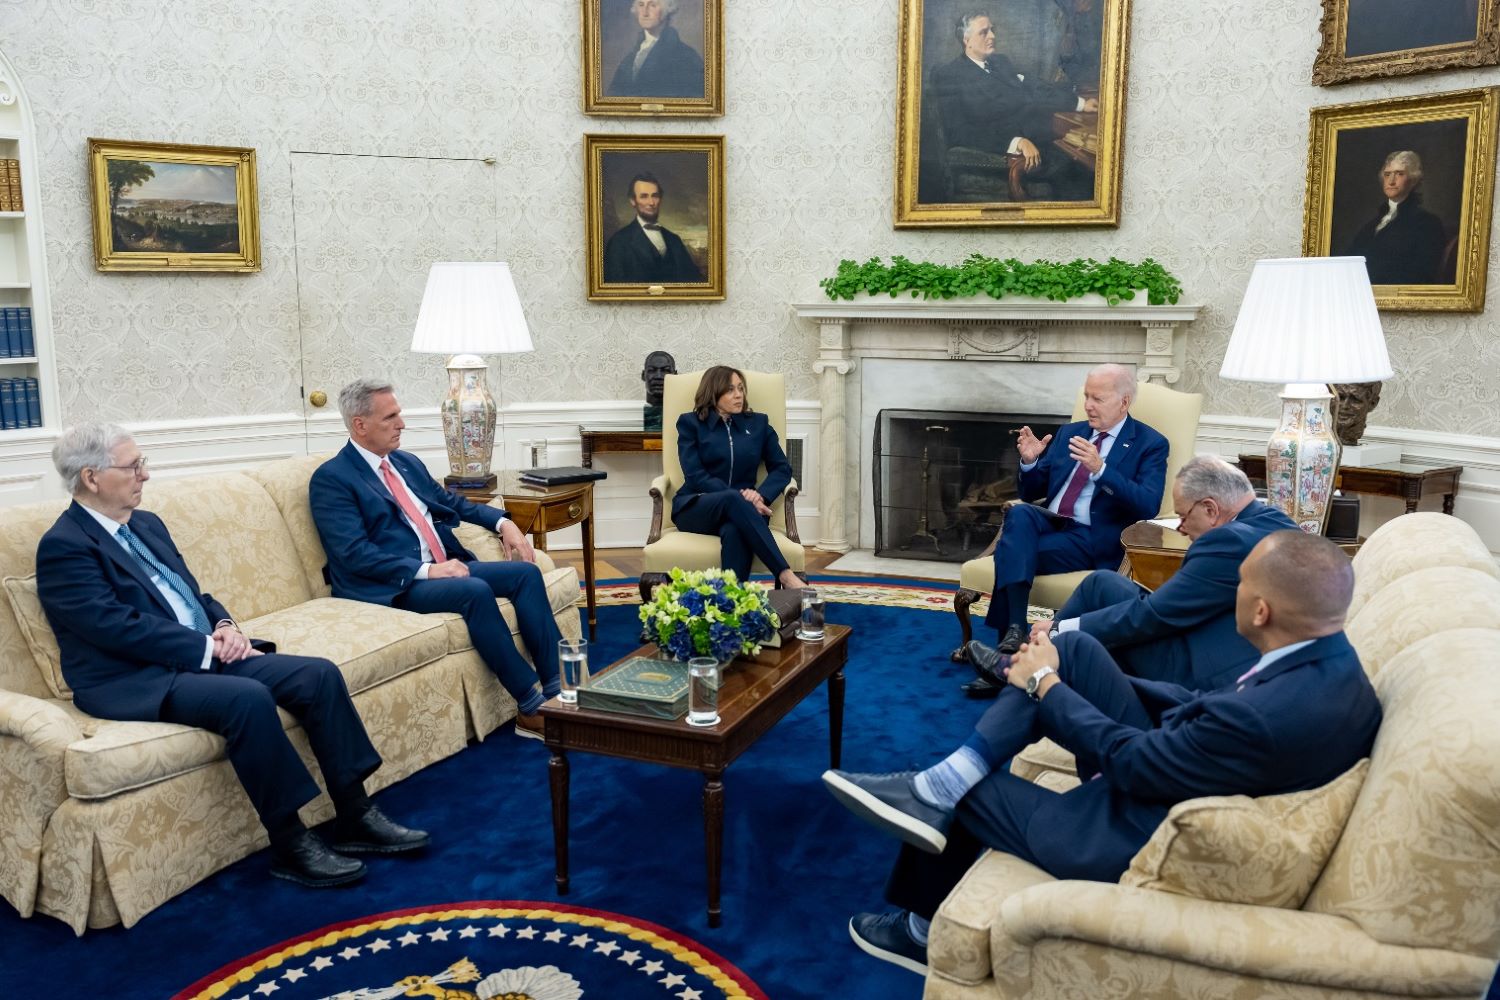 President Biden is in a meeting